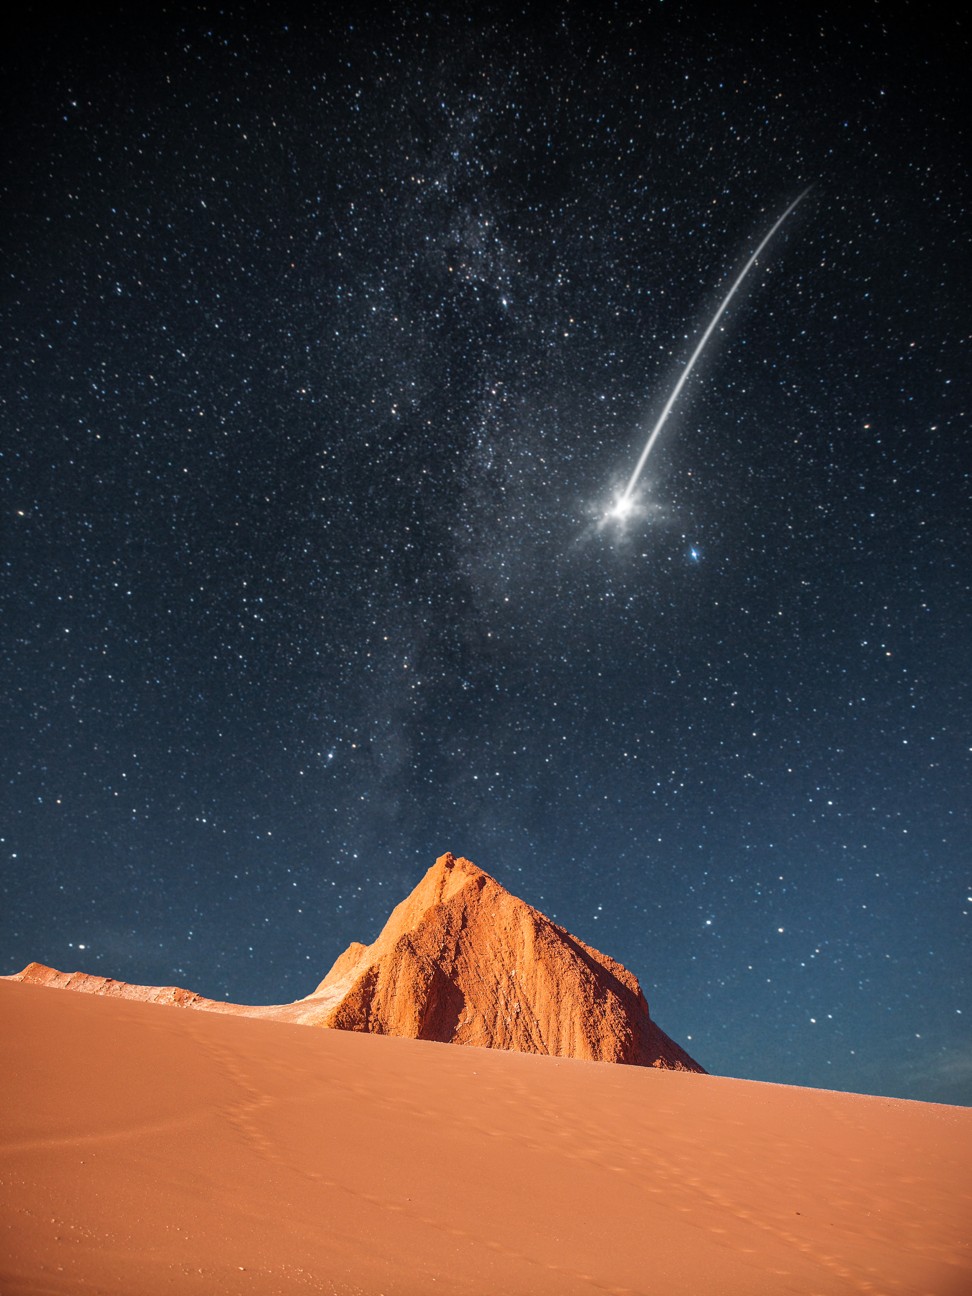 The Atacama Desert in Chile has one of the best skies around the world for stargazing. Photo: Scott Dunn